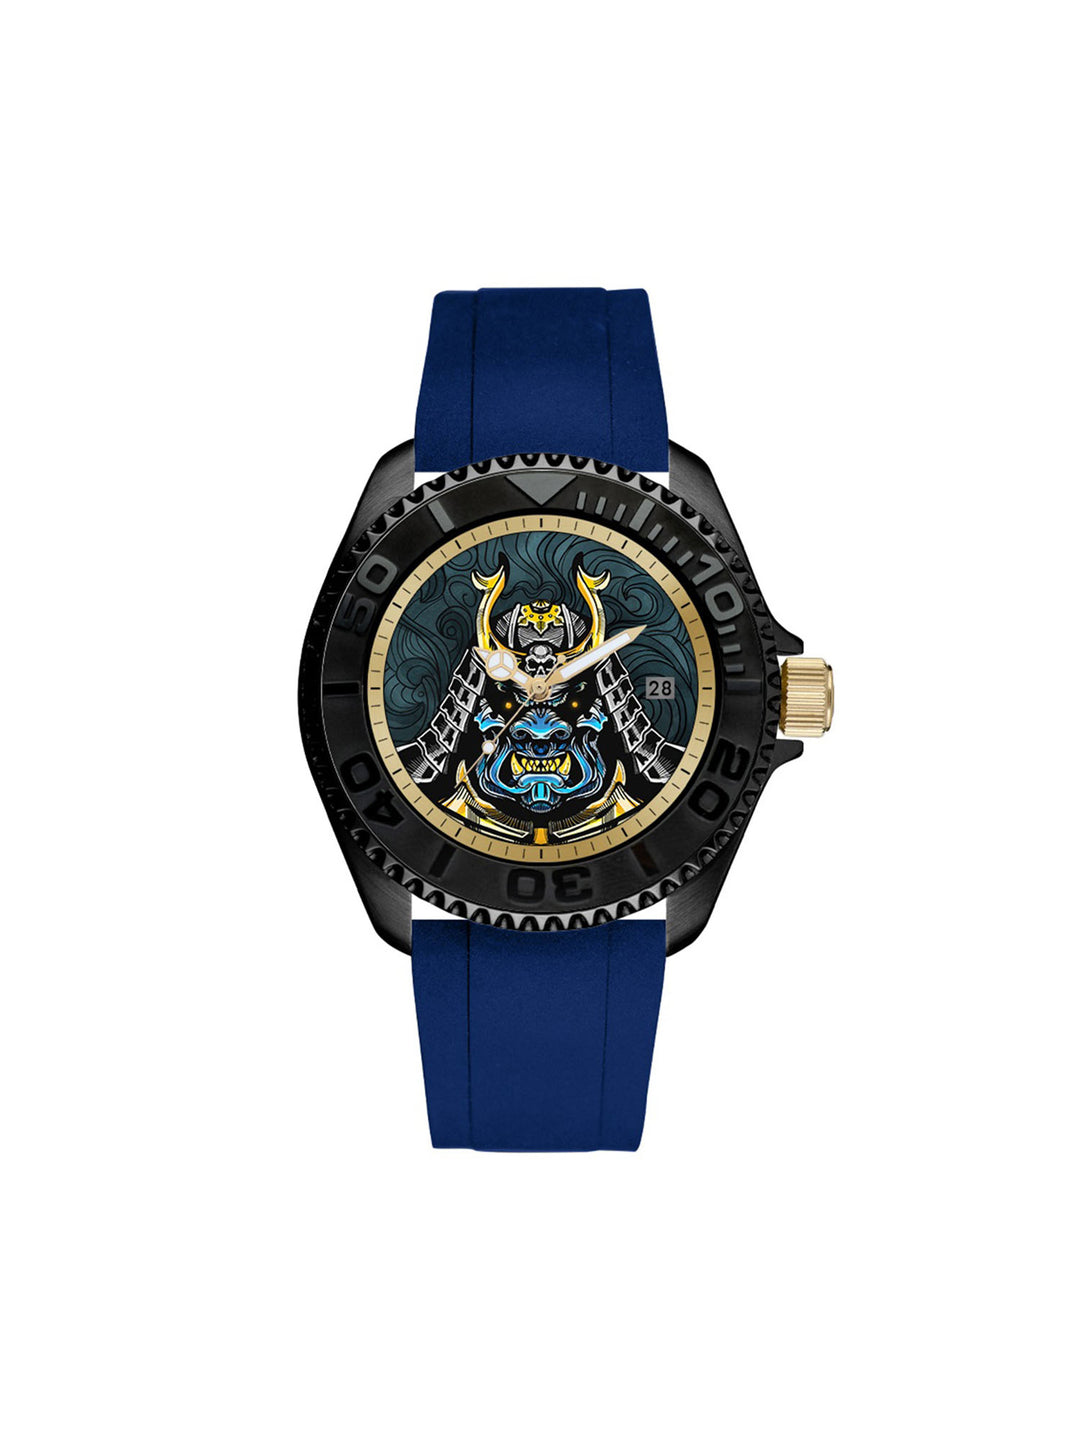 Limited Edition Samuari Automatic Men's Watch -  G 9040 SAM-BL